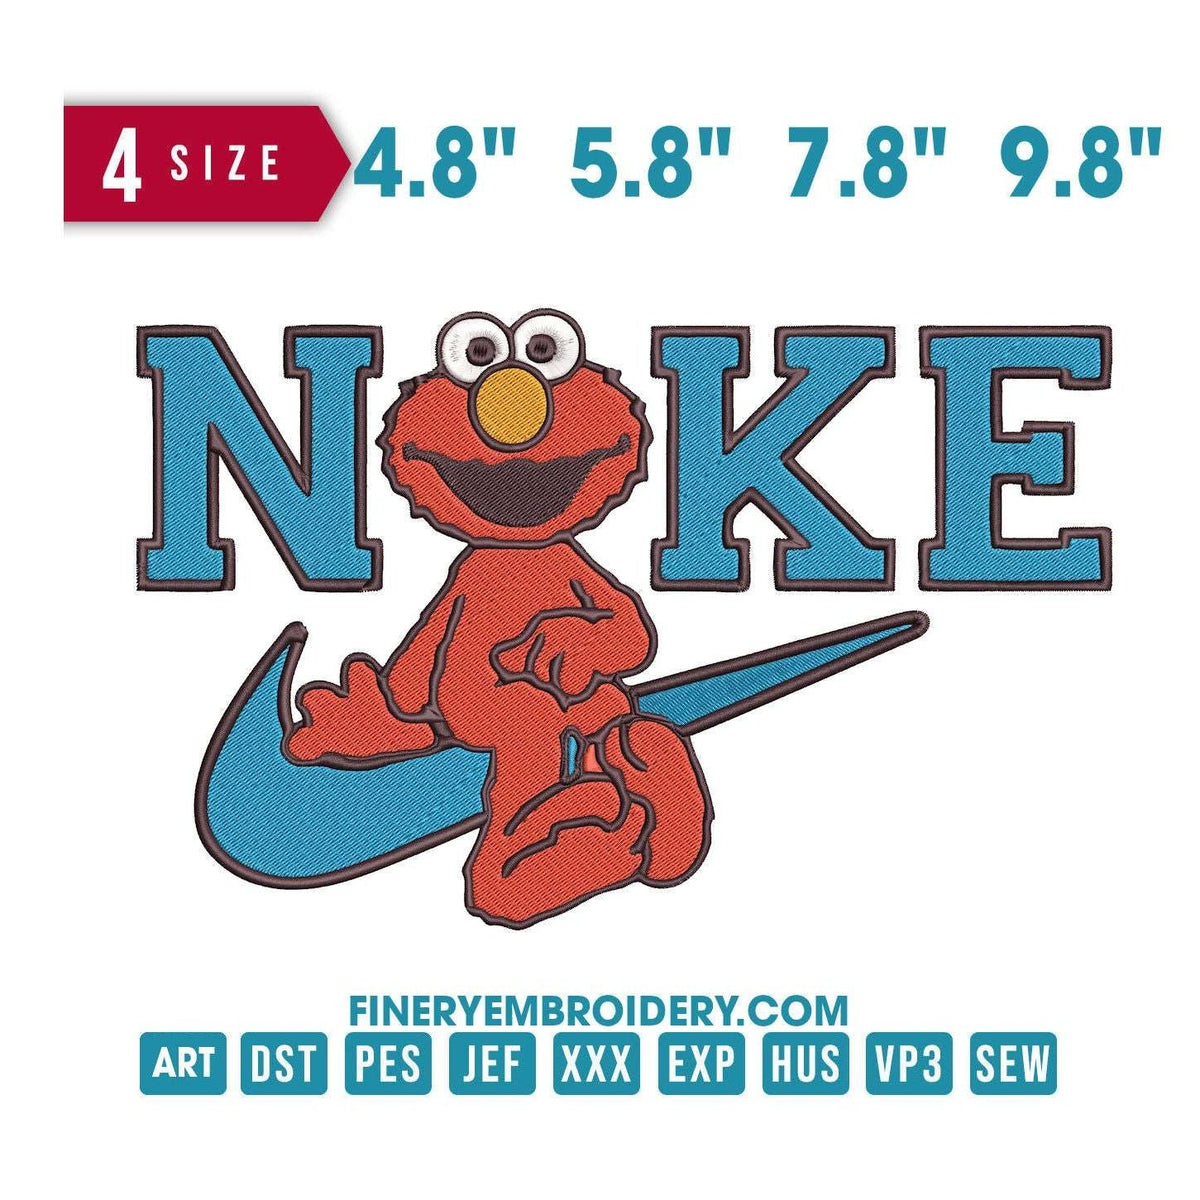 Nike Elmo 3 - Embroidery Design FineryEmbroidery